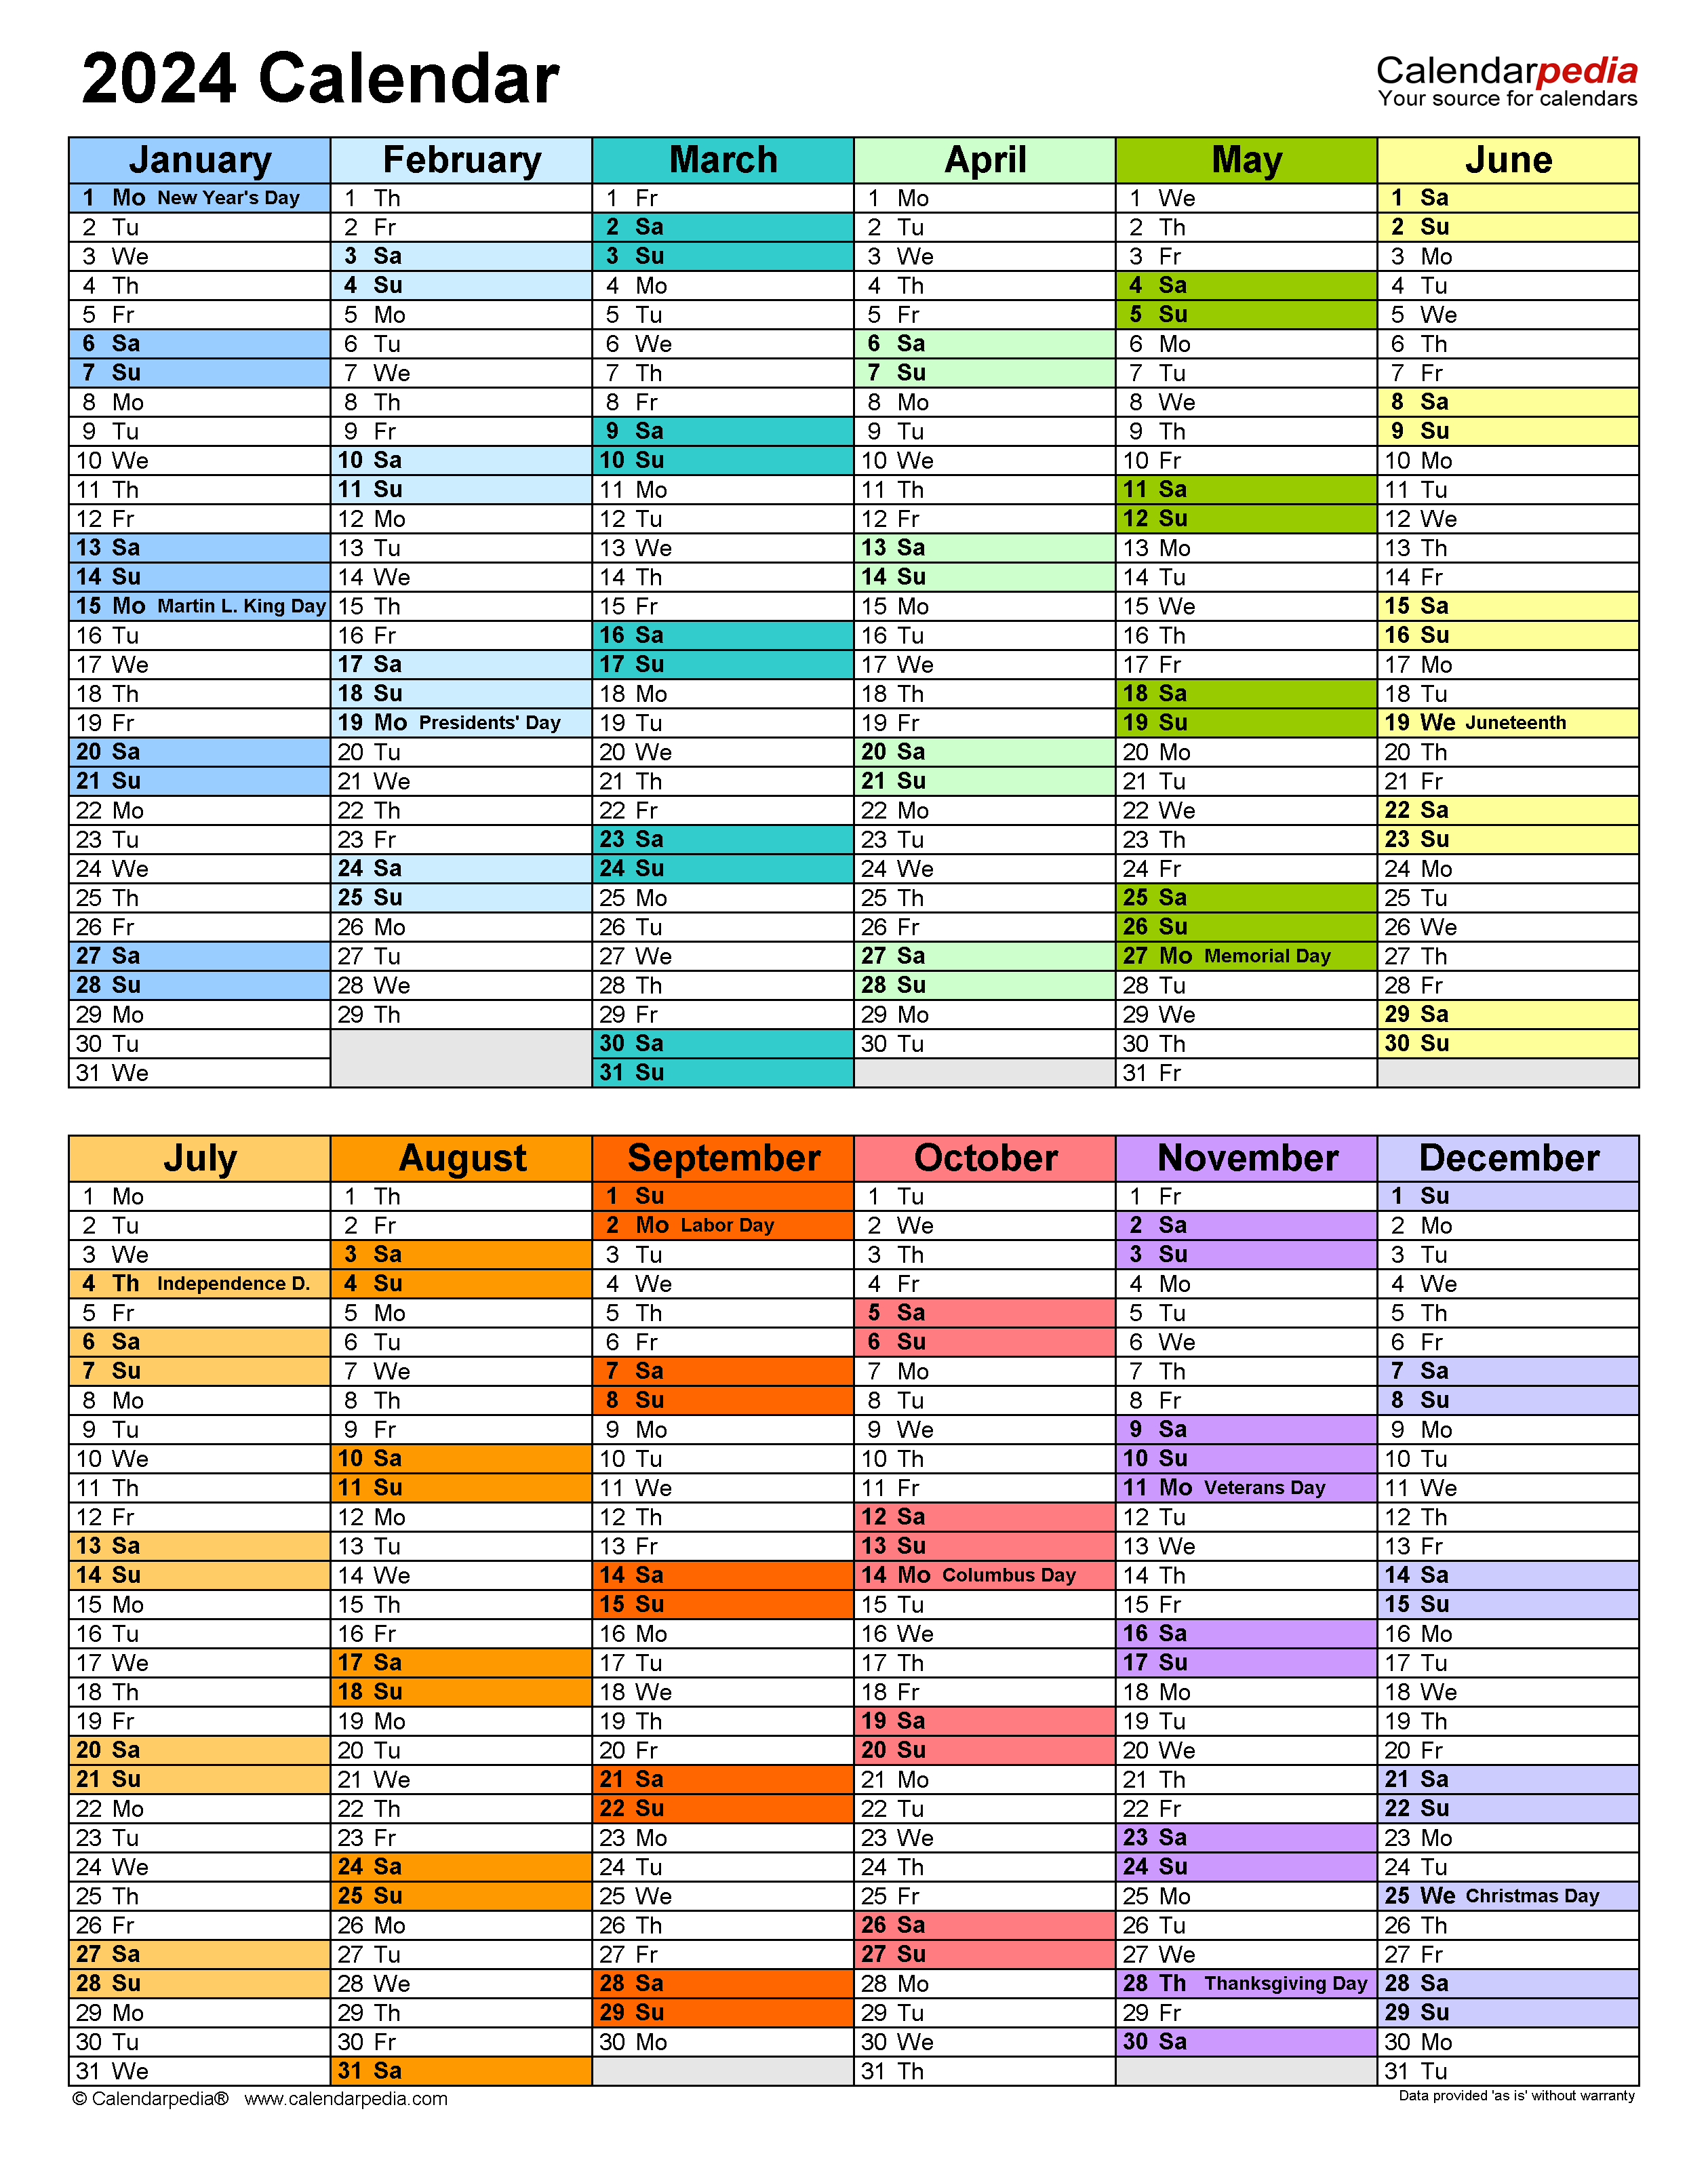 2024 Calendar Free Printable Excel Templates Calendarpedia 2024 - Free Printable 2024 Calendar Excel